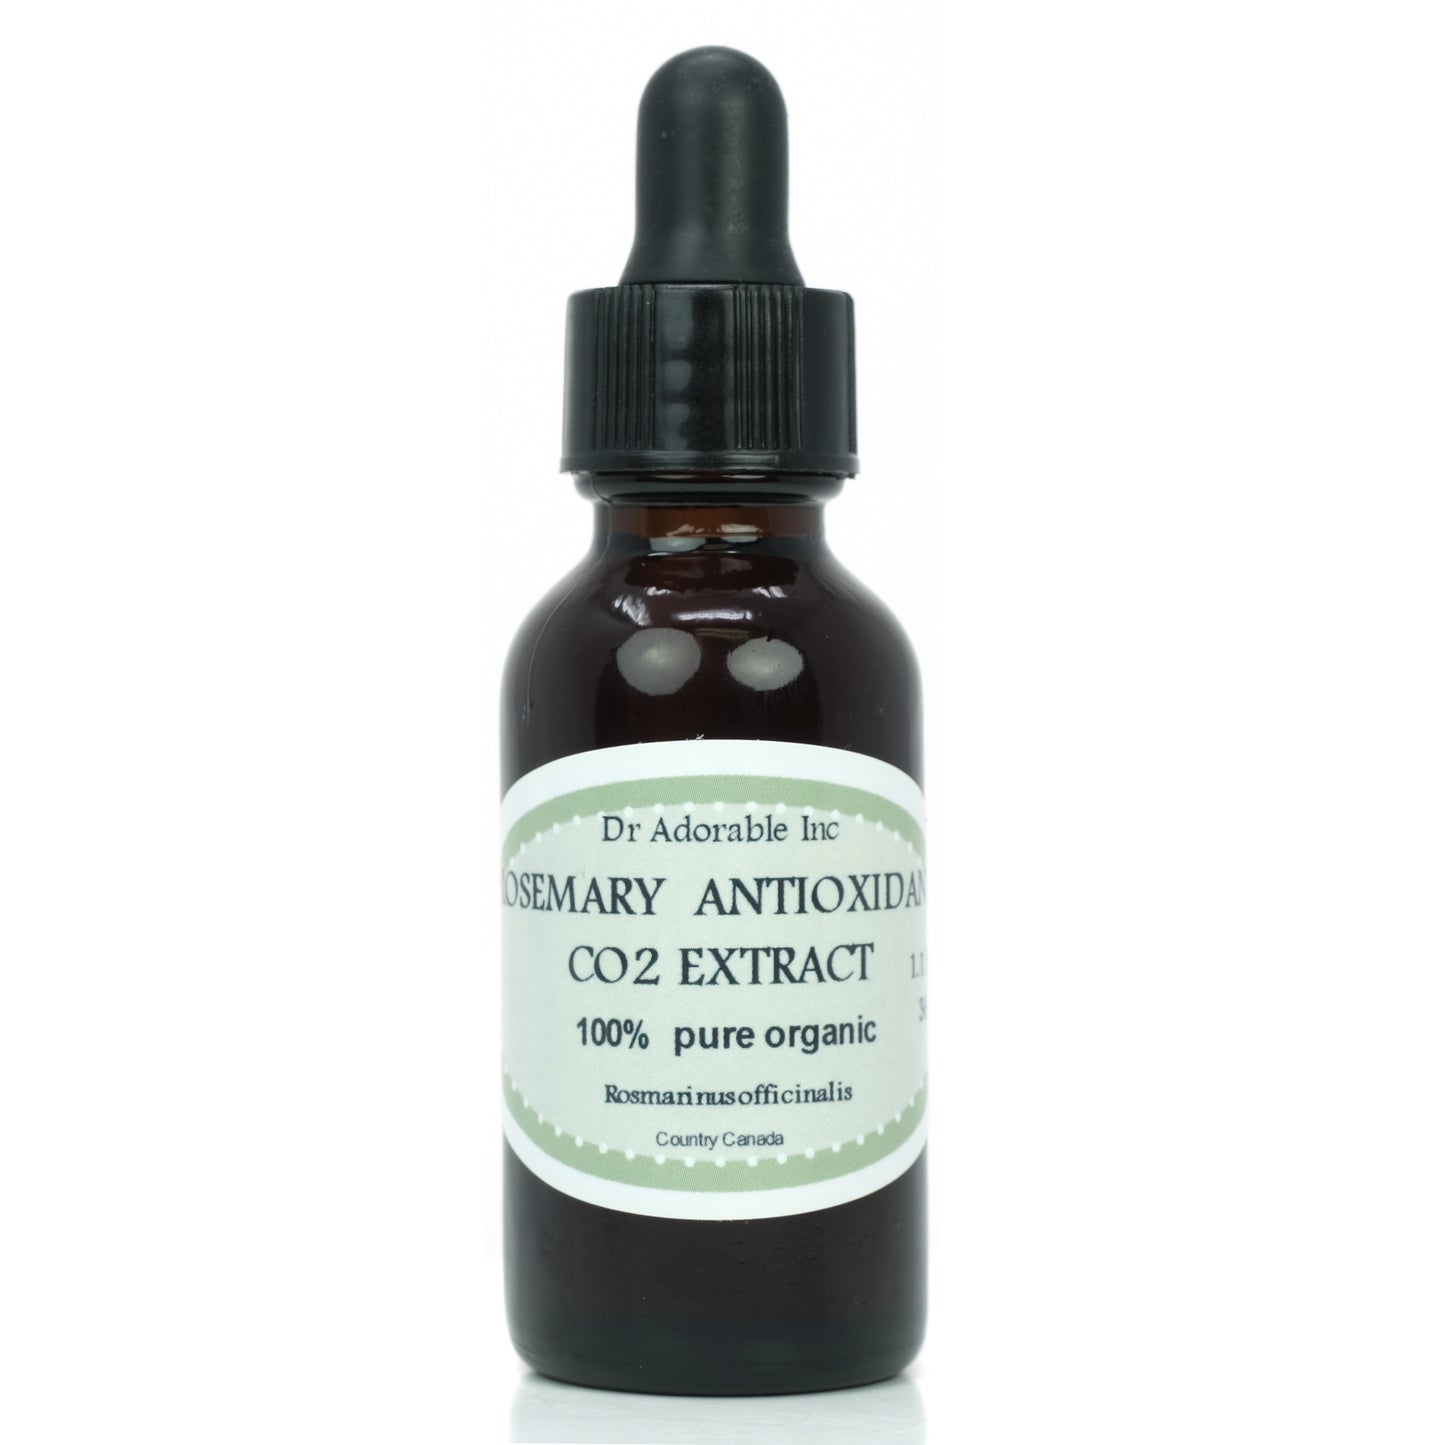 Rosemary Antioxidant Co2 Extract Organic Pure